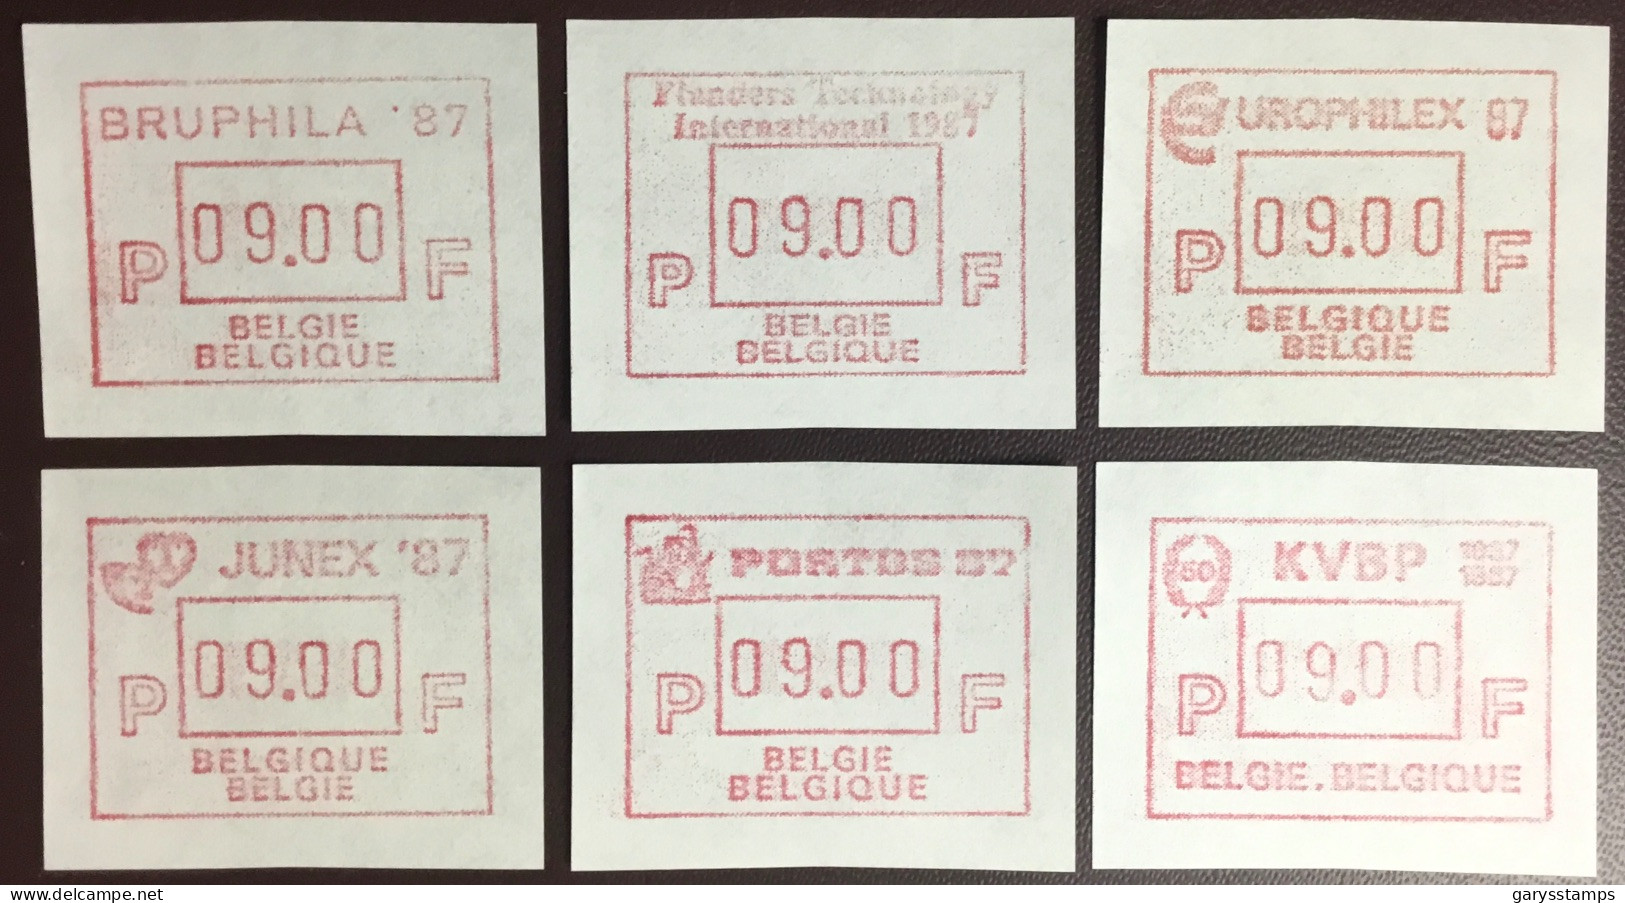 Belgium 1987 ATM Machine Stamps MNH - Mint